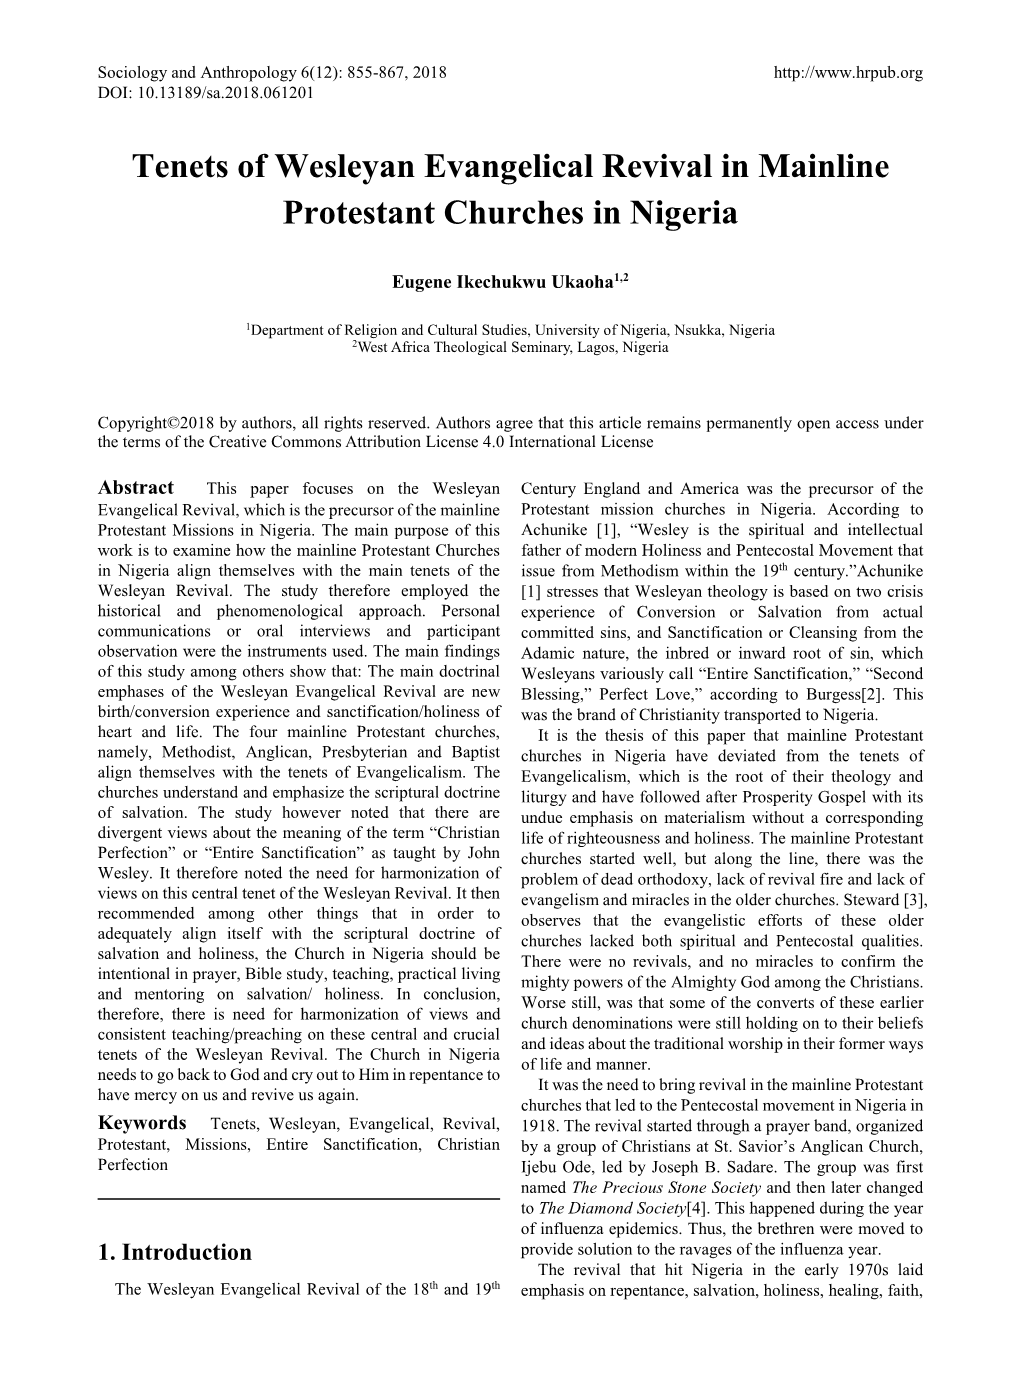 Tenets of Wesleyan Evangelical Revival in Mainline Protestant Churches in Nigeria